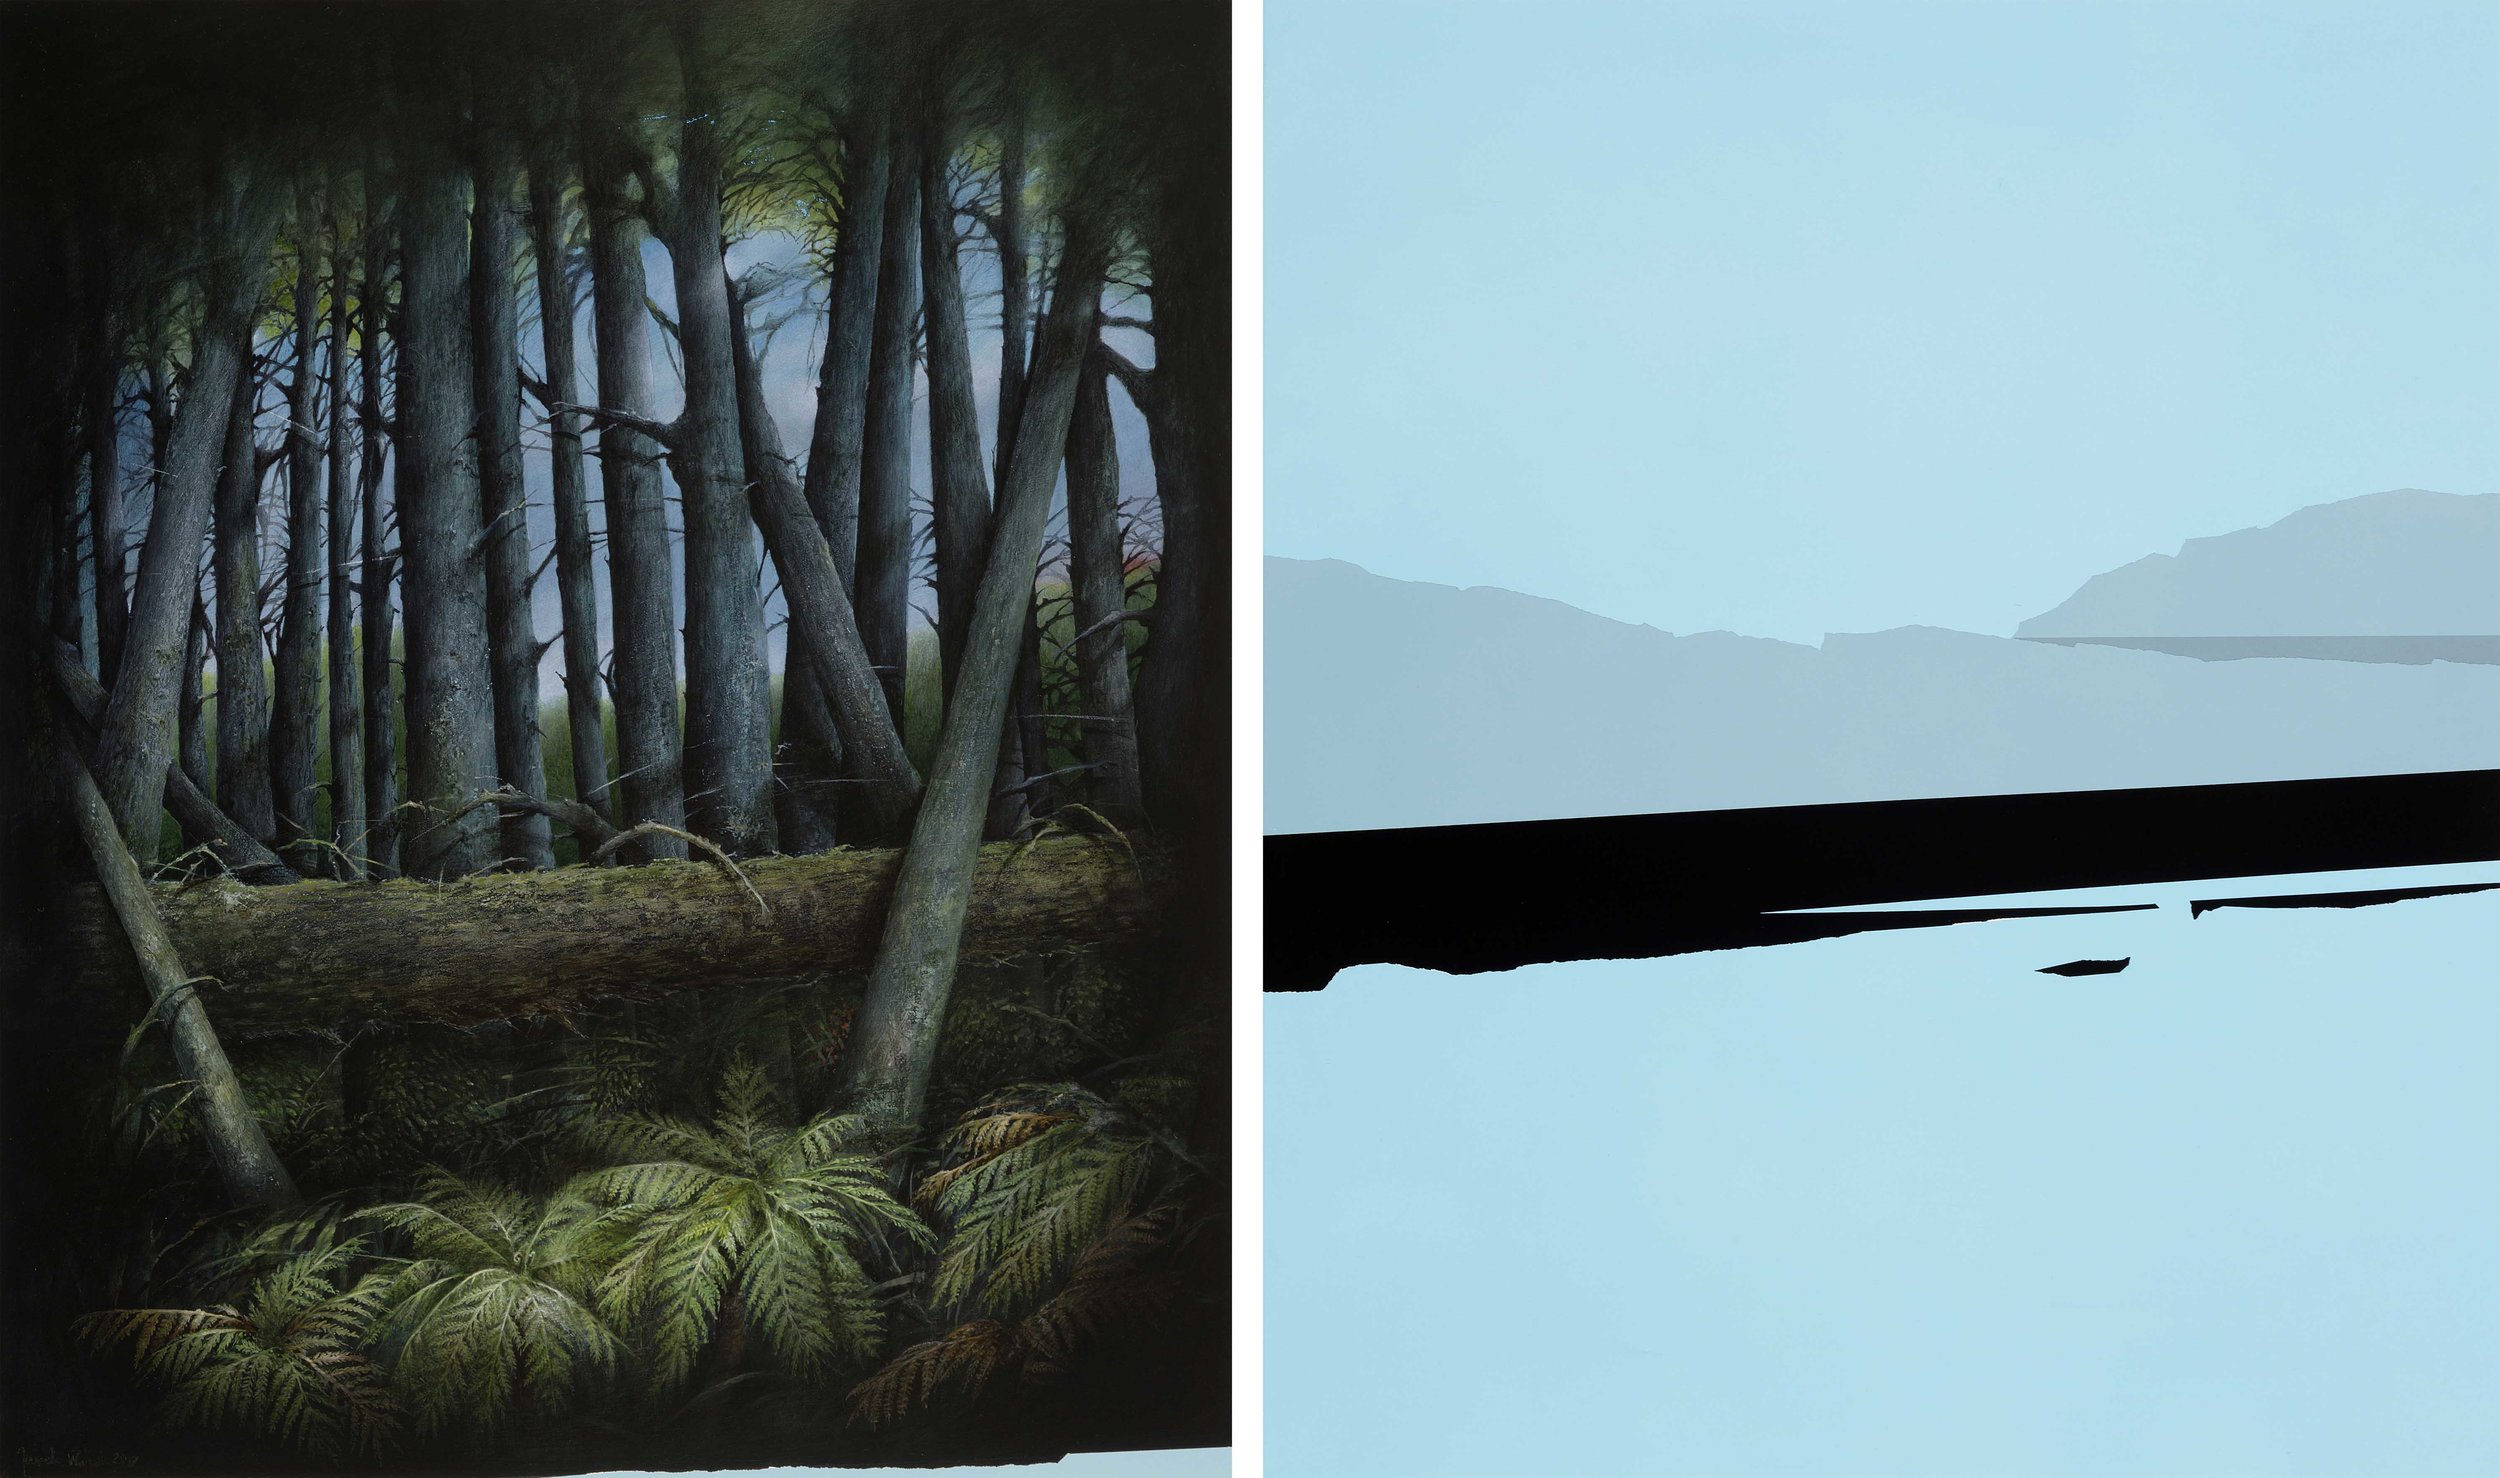    
  
  
 
 
 
 
 
 
 
 
 
 
 
 
  
  
  
  
  
   Recording Landscape , 2017,&nbsp;acrylic on polyester canvas,&nbsp;diptych 60 x 50 cm each panel 